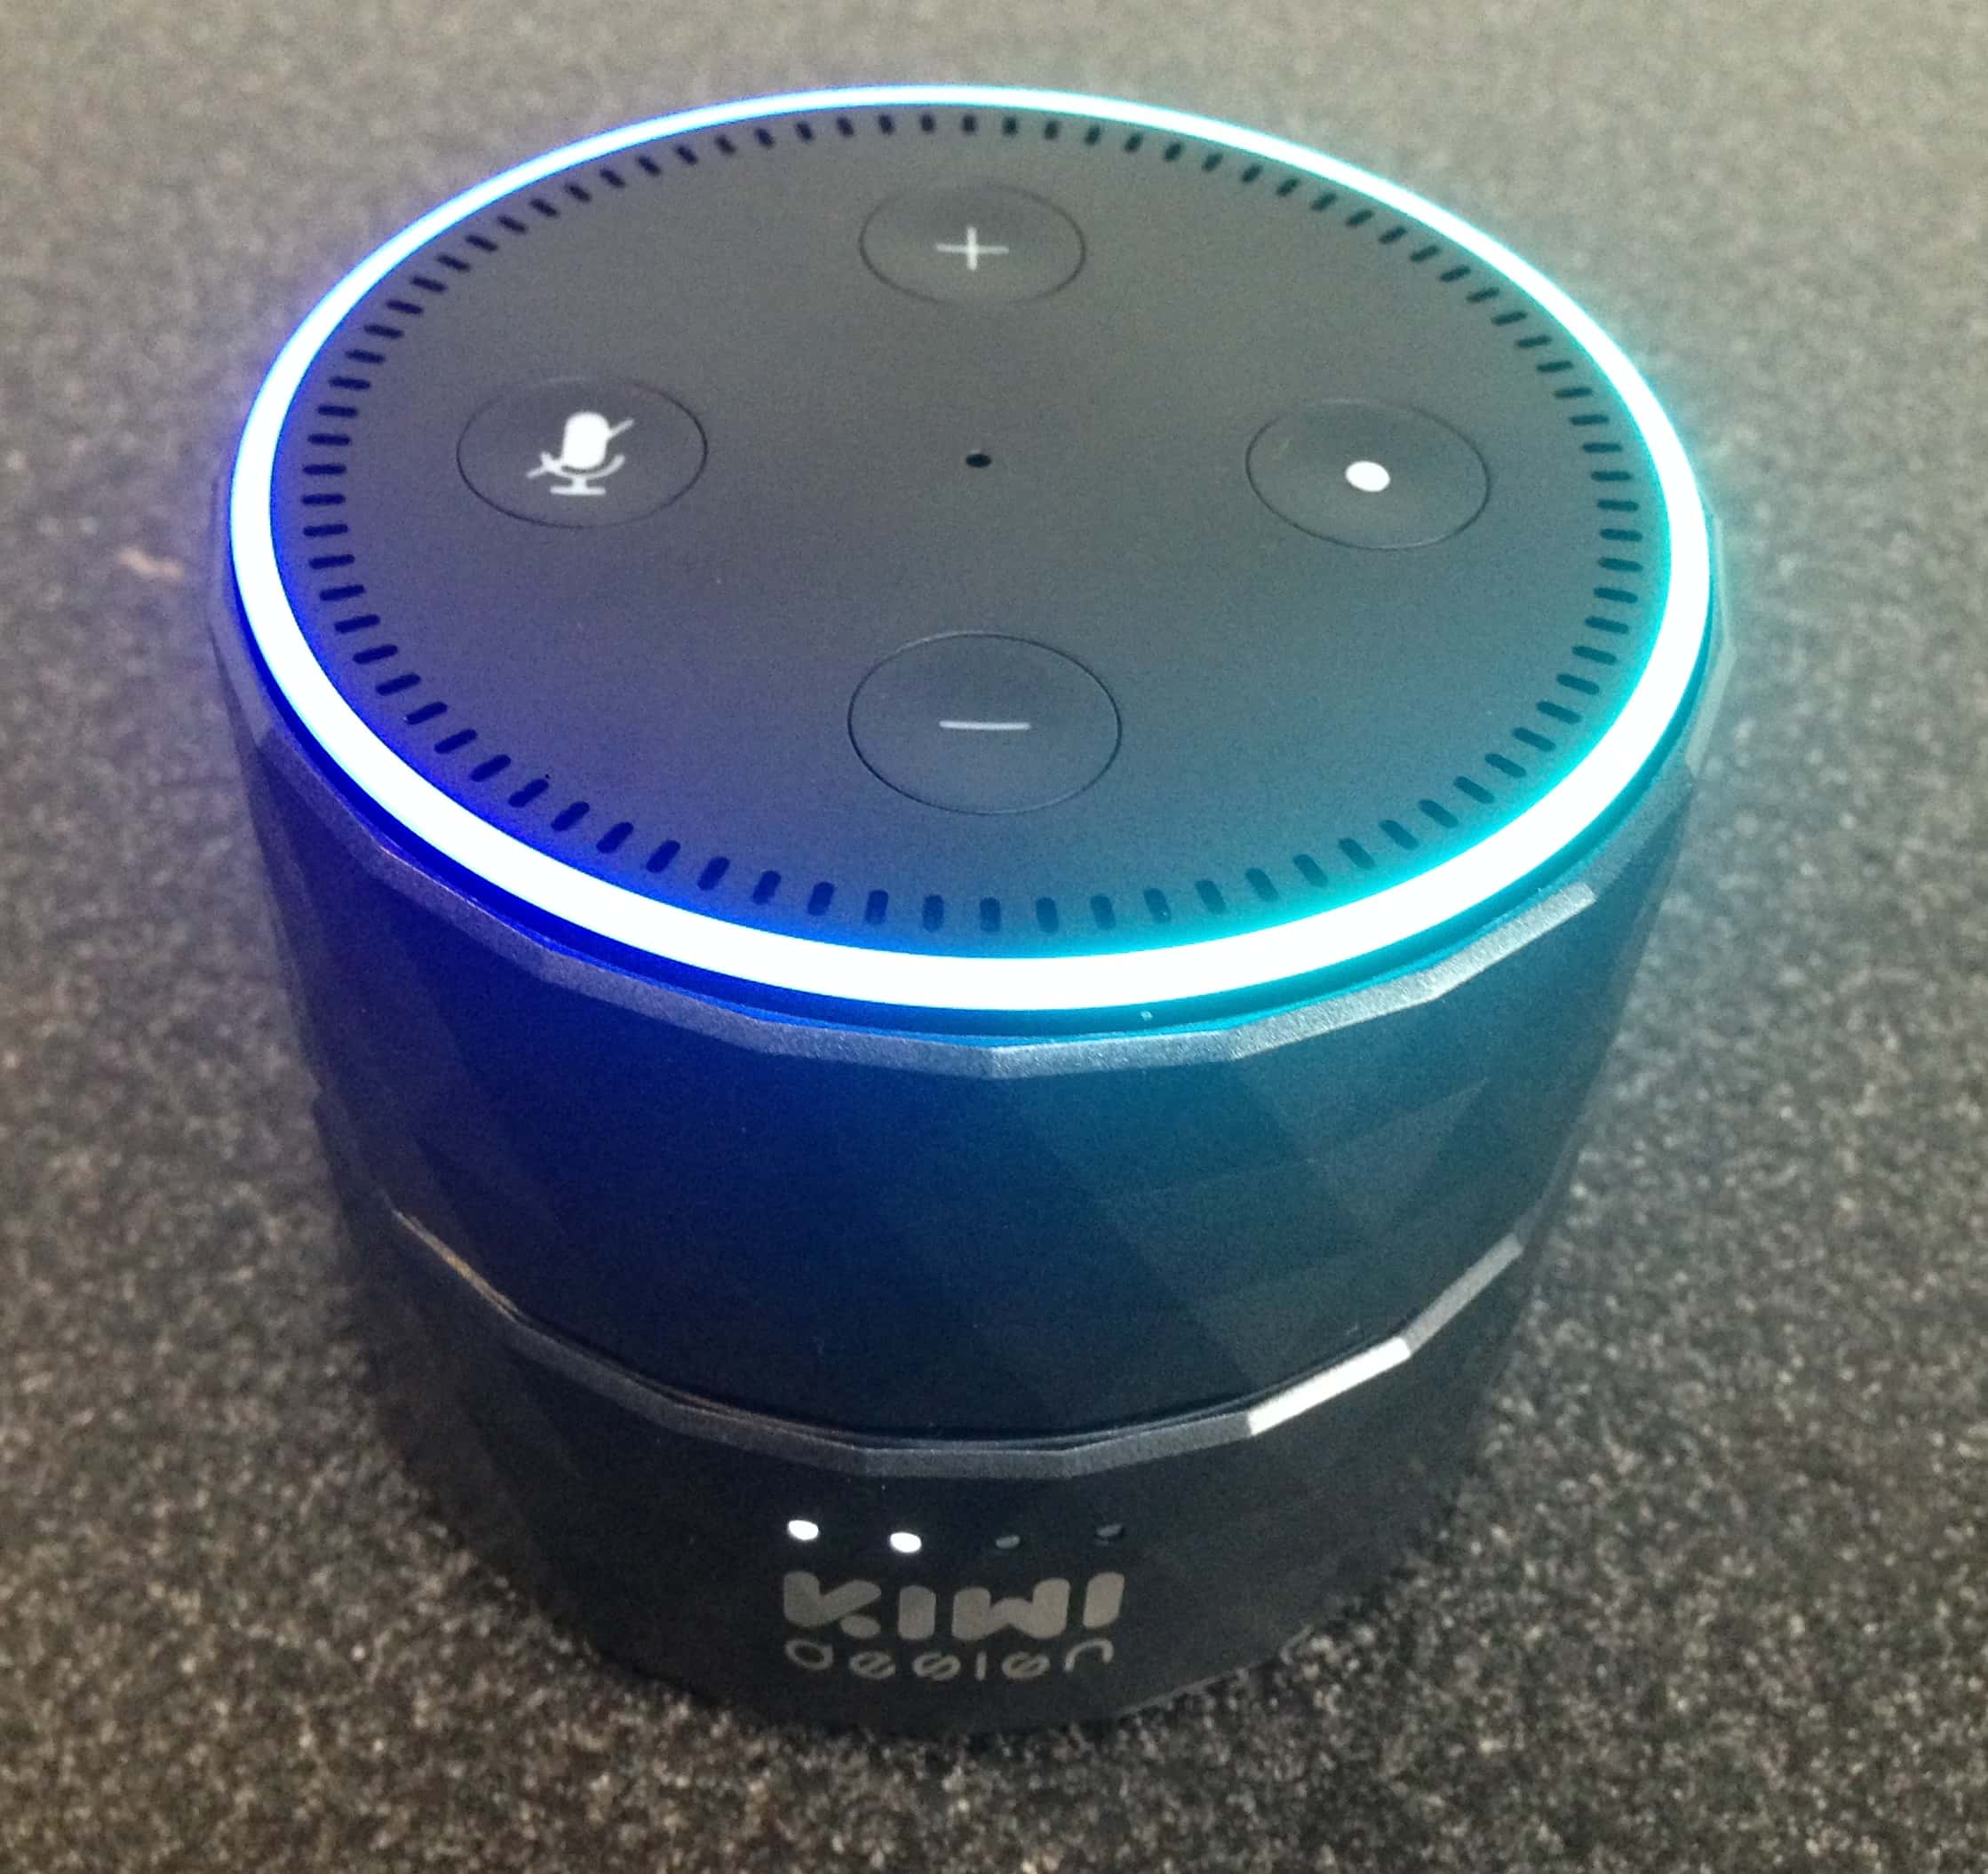 Amazon Echo Dot Battery Review UK